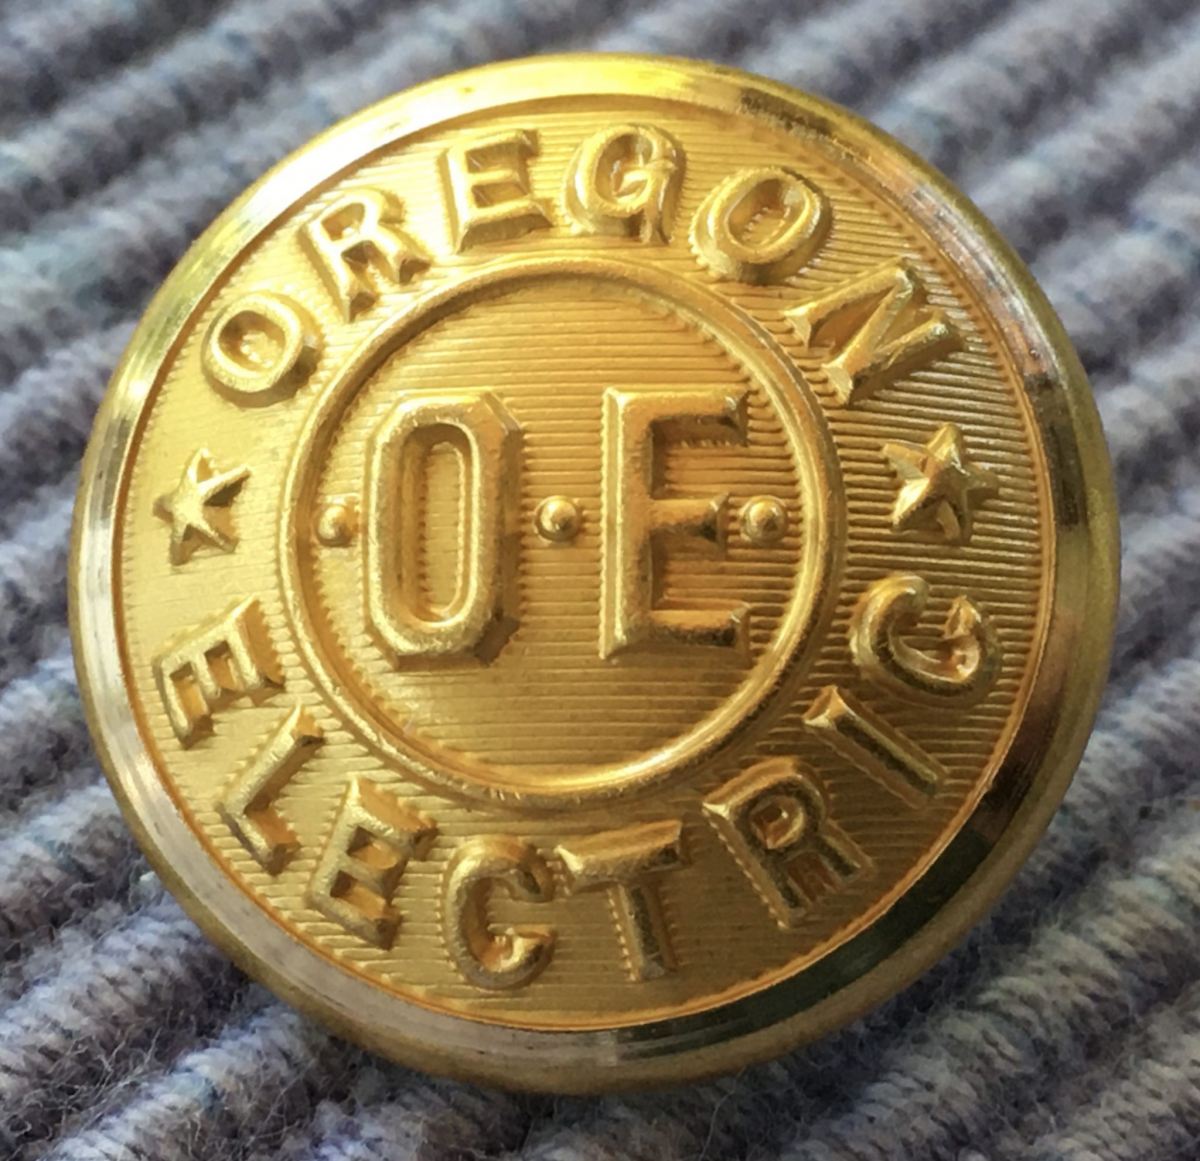 Oregon Electric Railway, “souvenir” button